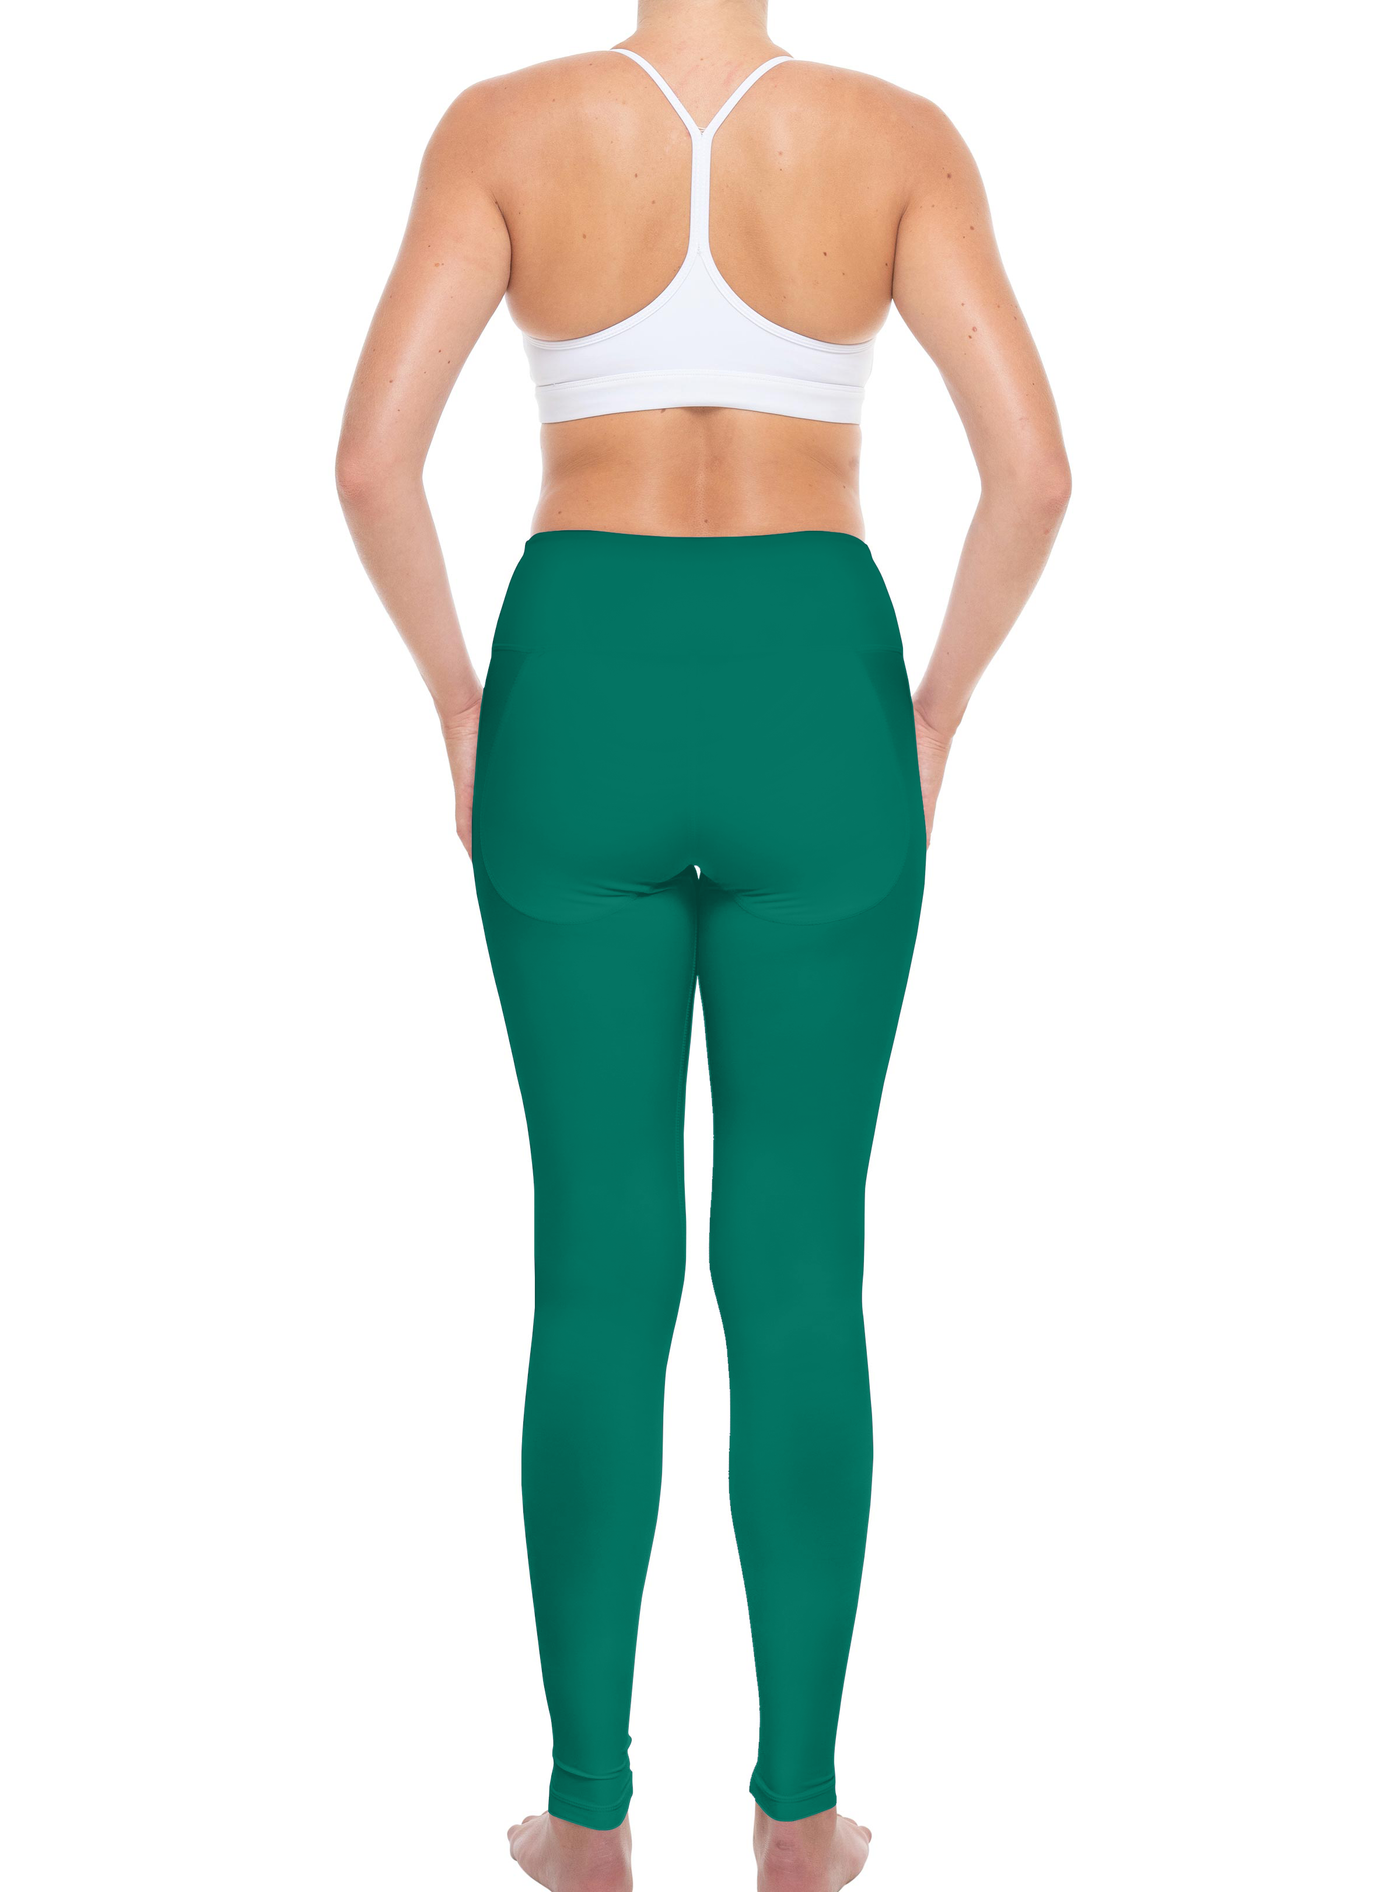 Women's Emerald Green Paddle Pants (Incl. Seat Pad)